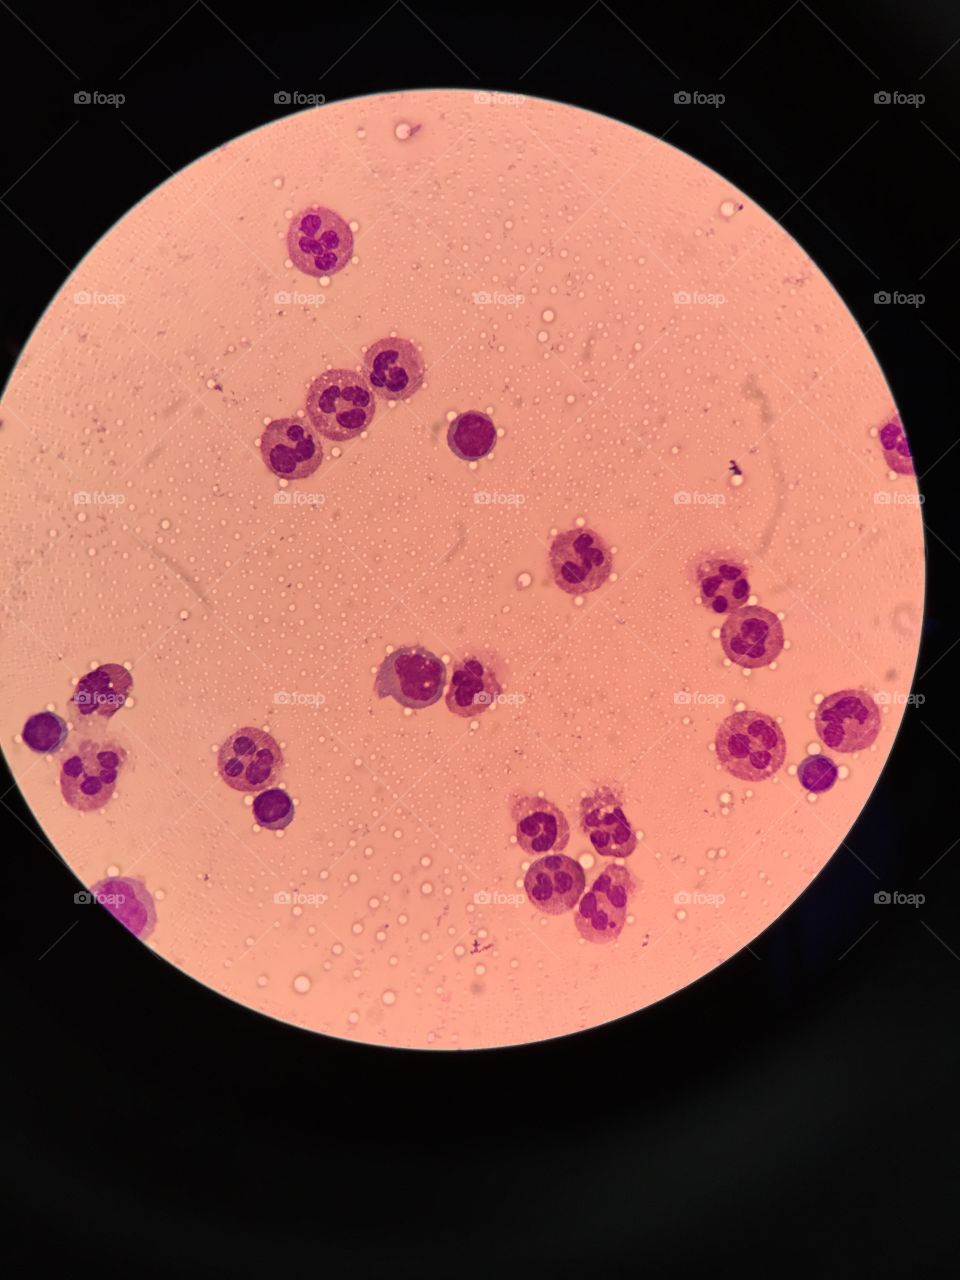 Neutrophils monocytes Eosinophils in PDF 